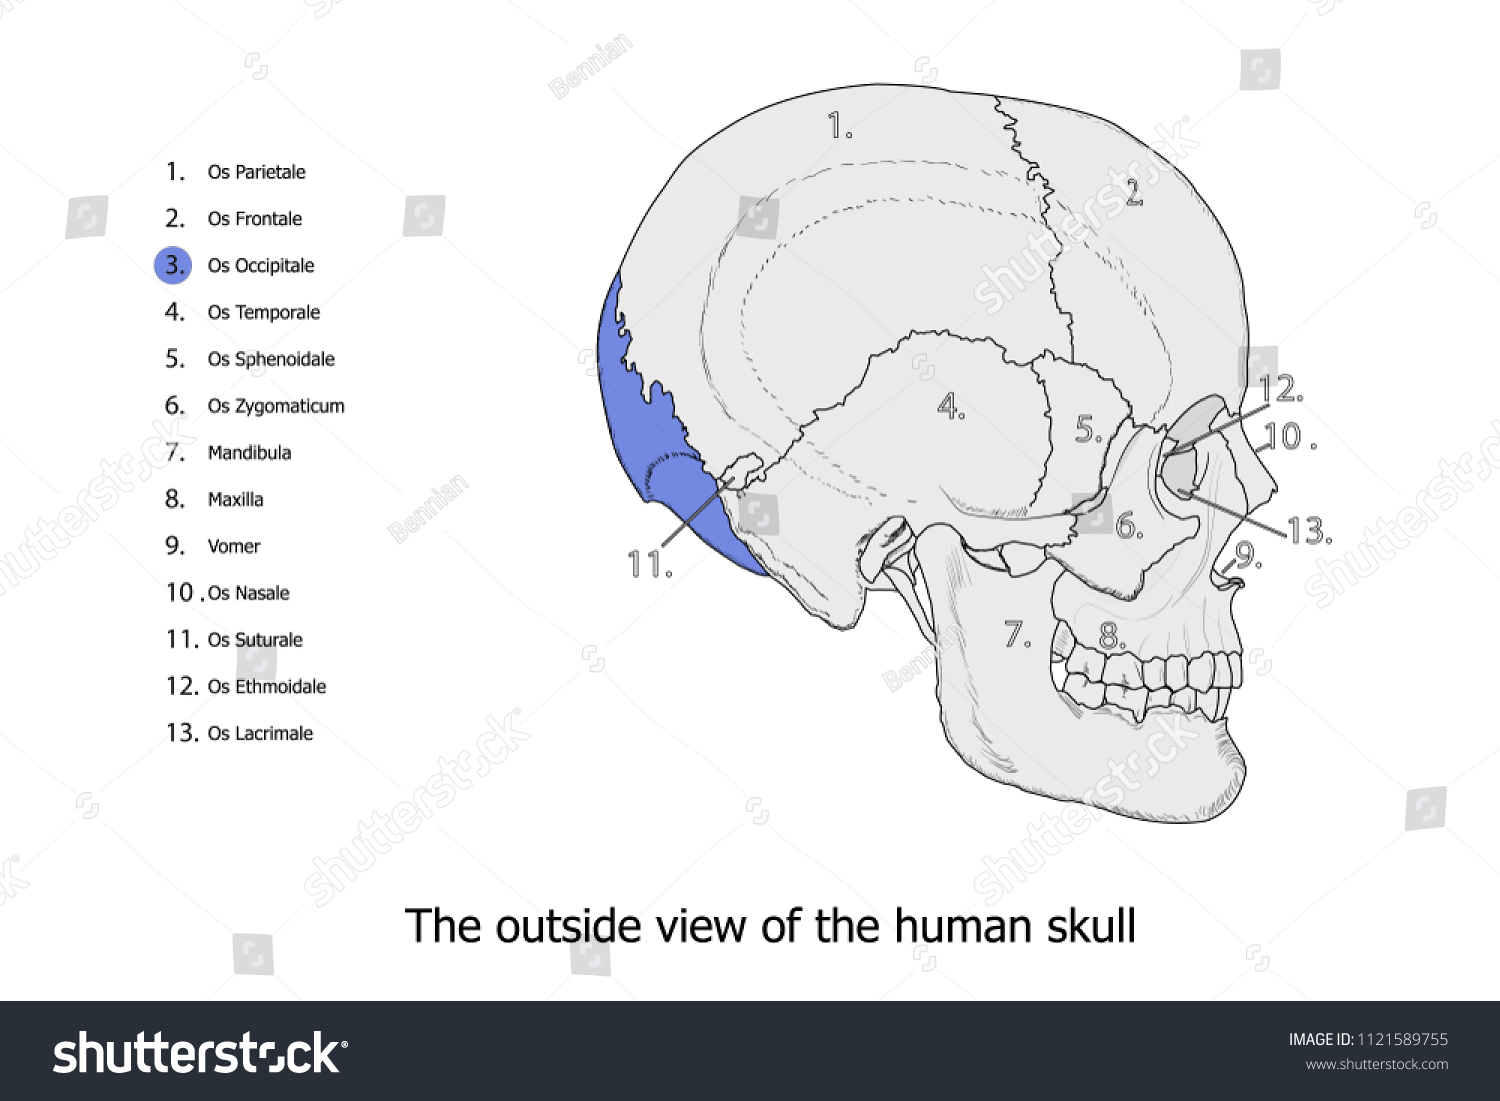 Os Occipitale Colored Dark Purple Anatomy Stock Vector Royalty Free 1121589755 Shutterstock 1673